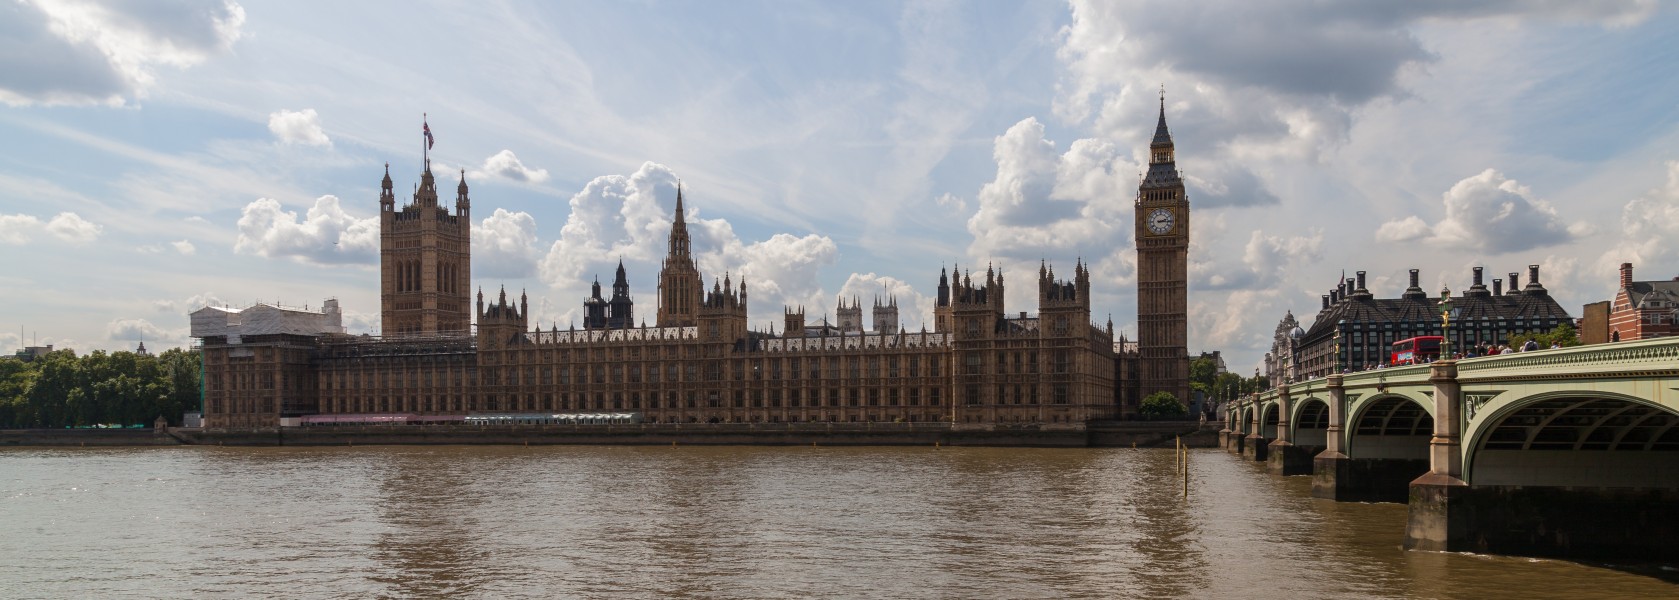 Palacio de Westminster, Londres, Inglaterra, 2014-08-07, DD 030